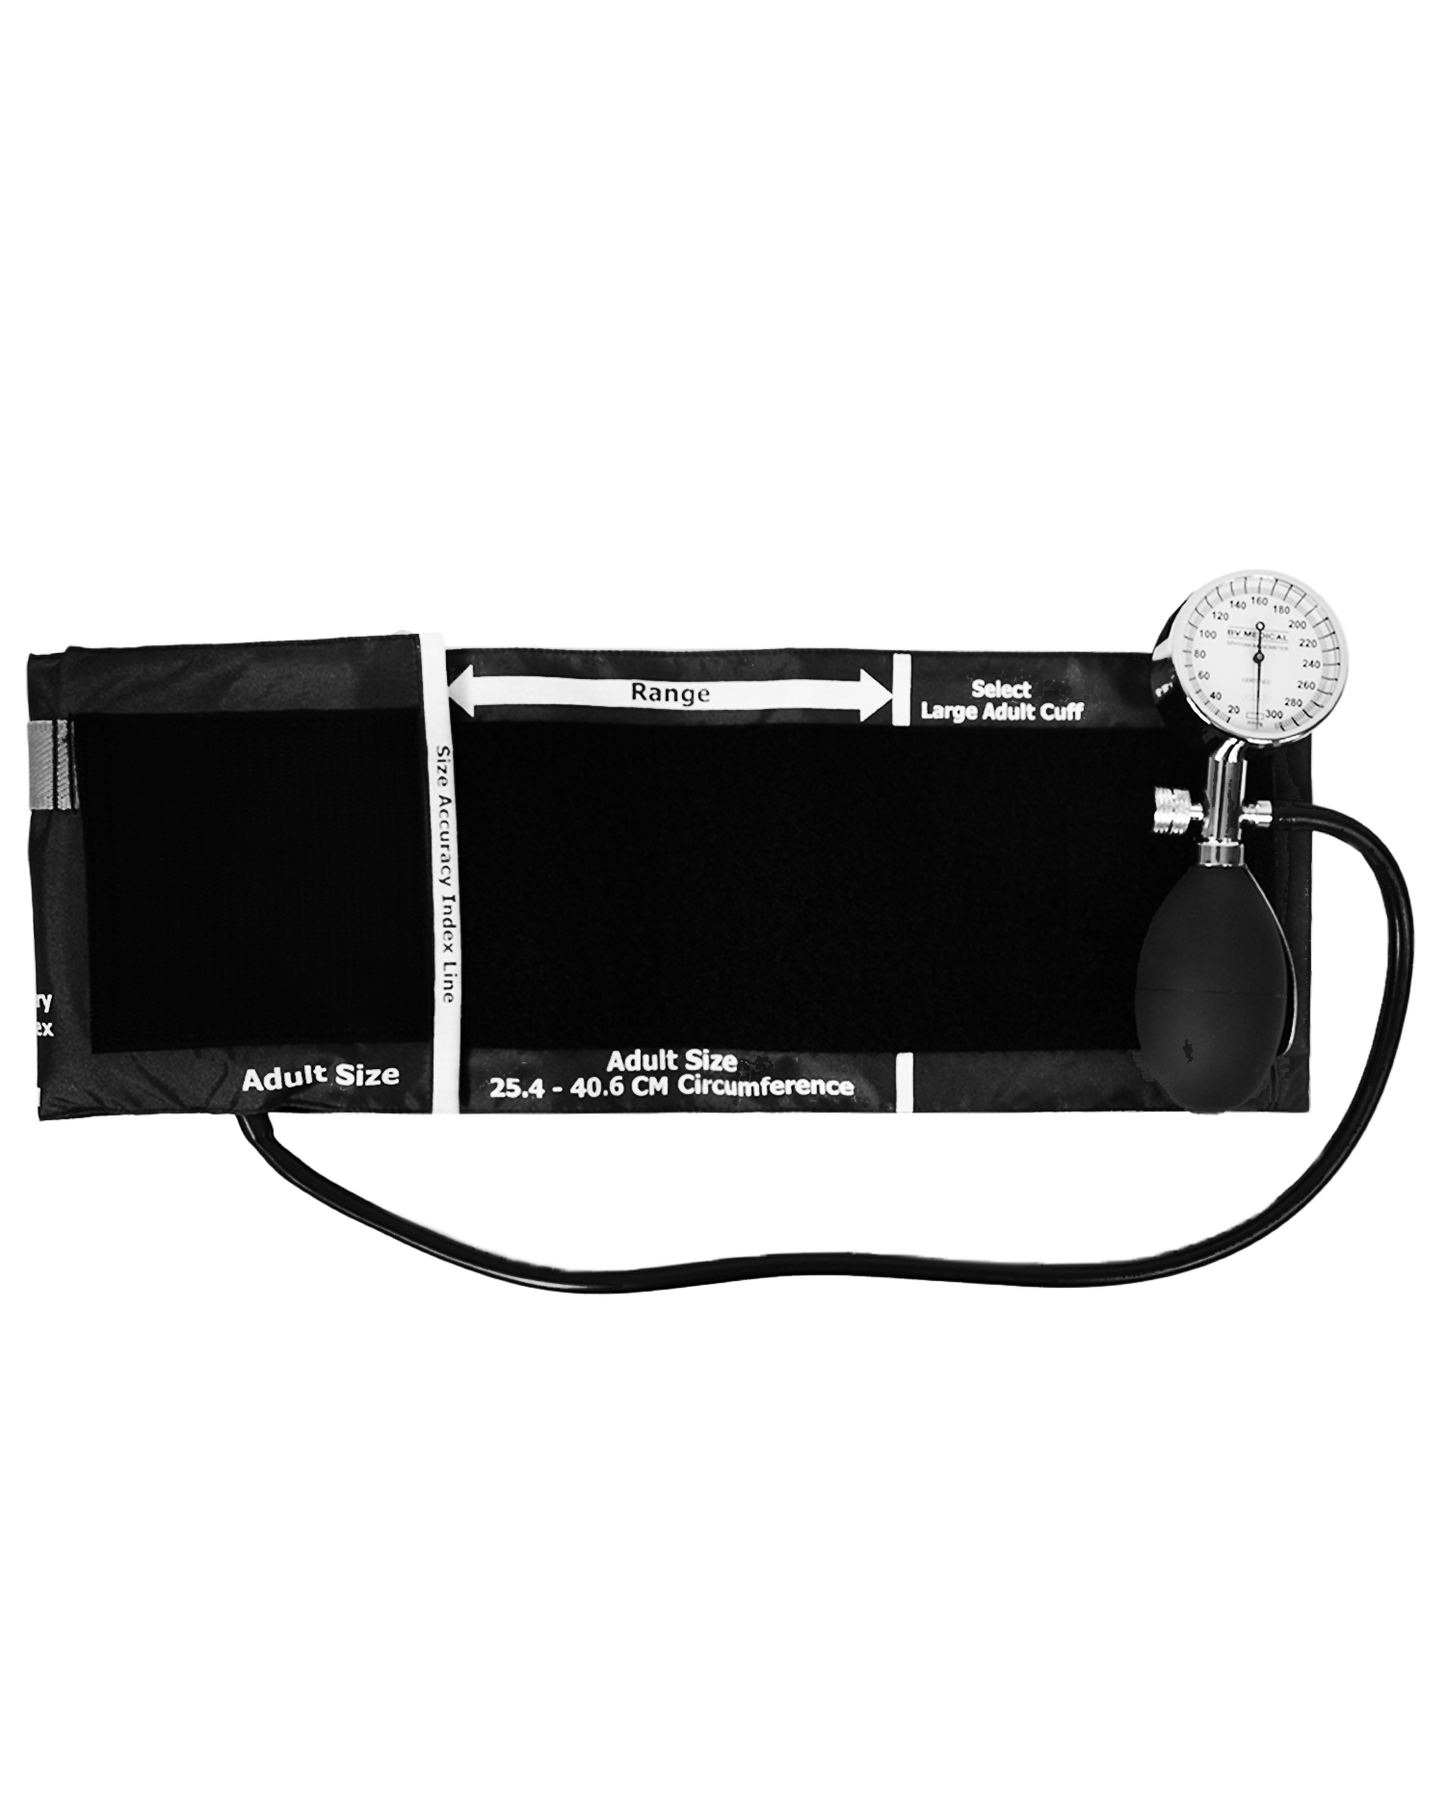 BV Medical Palm Aneroid Sphygmomanometer